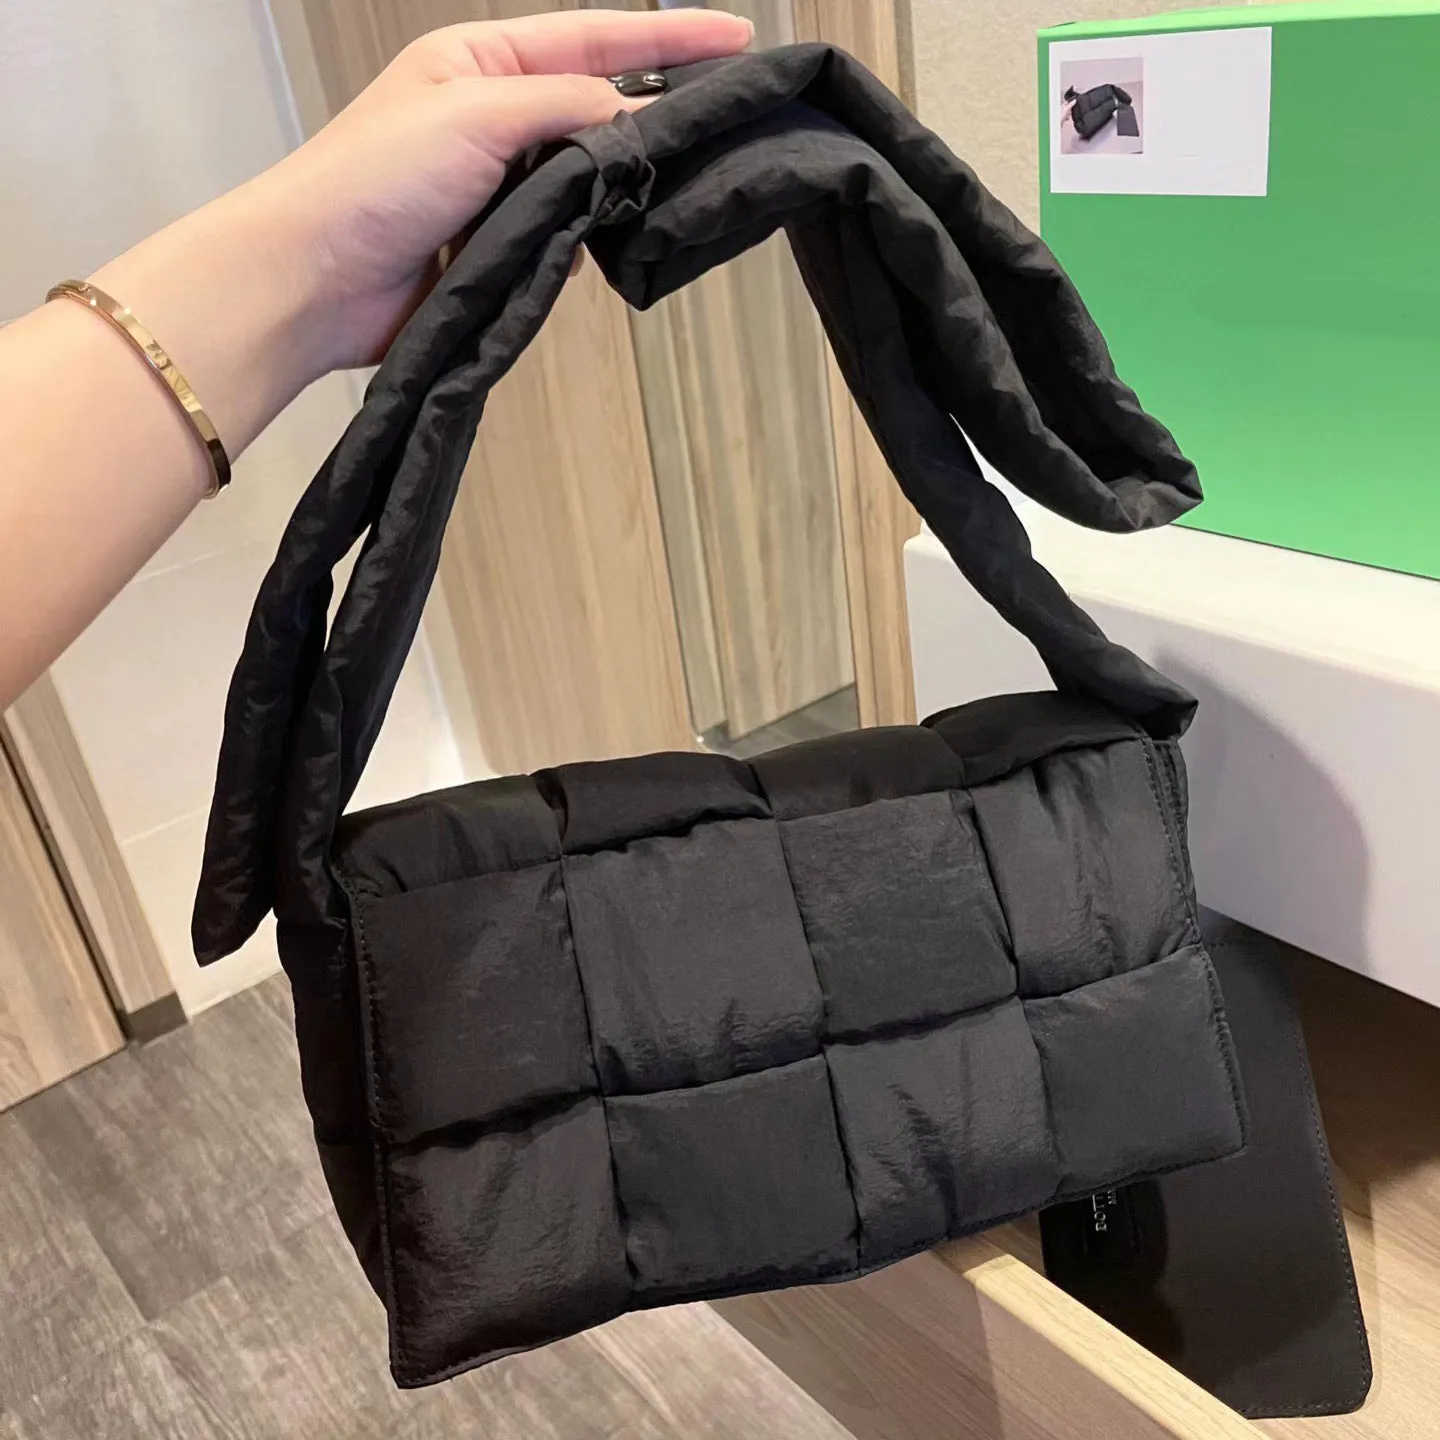 Axillary bag weaving purse Top designers High Quality Luxurys Ladies 2021 handbag Women fashion mother handbags bags shoulder wallet cossbody large capacity totes